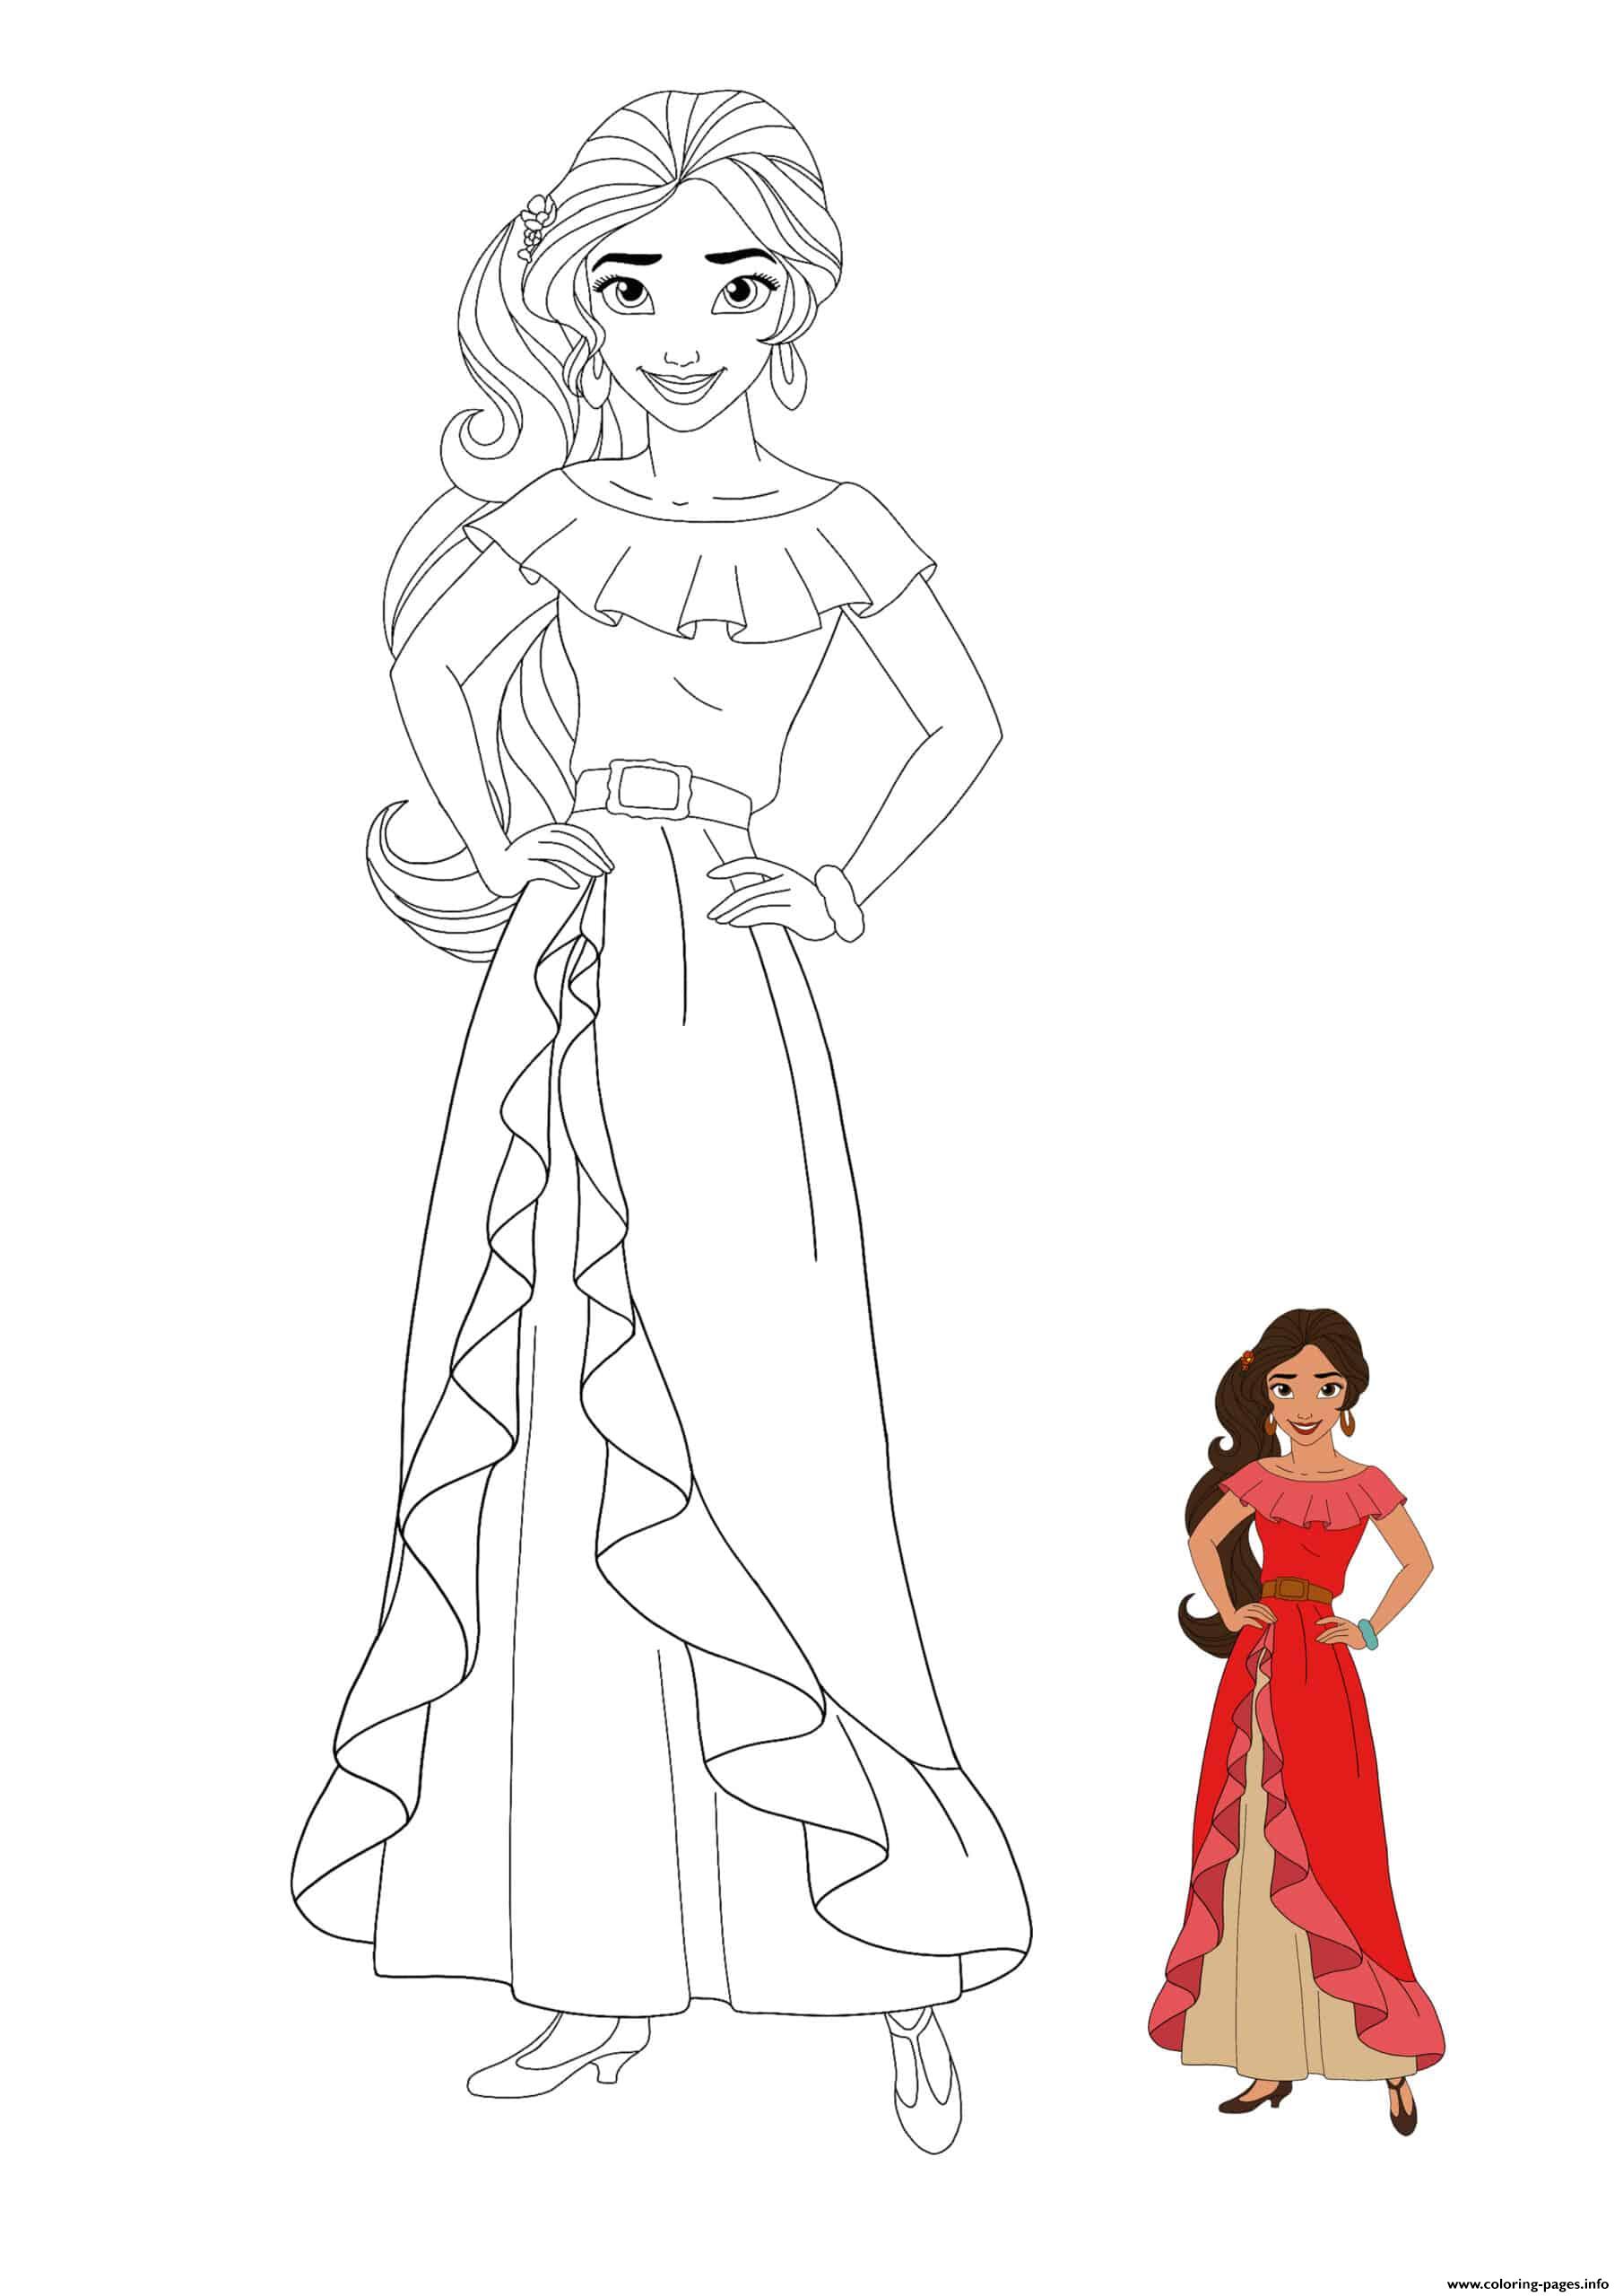 Disney Princess Elena coloring